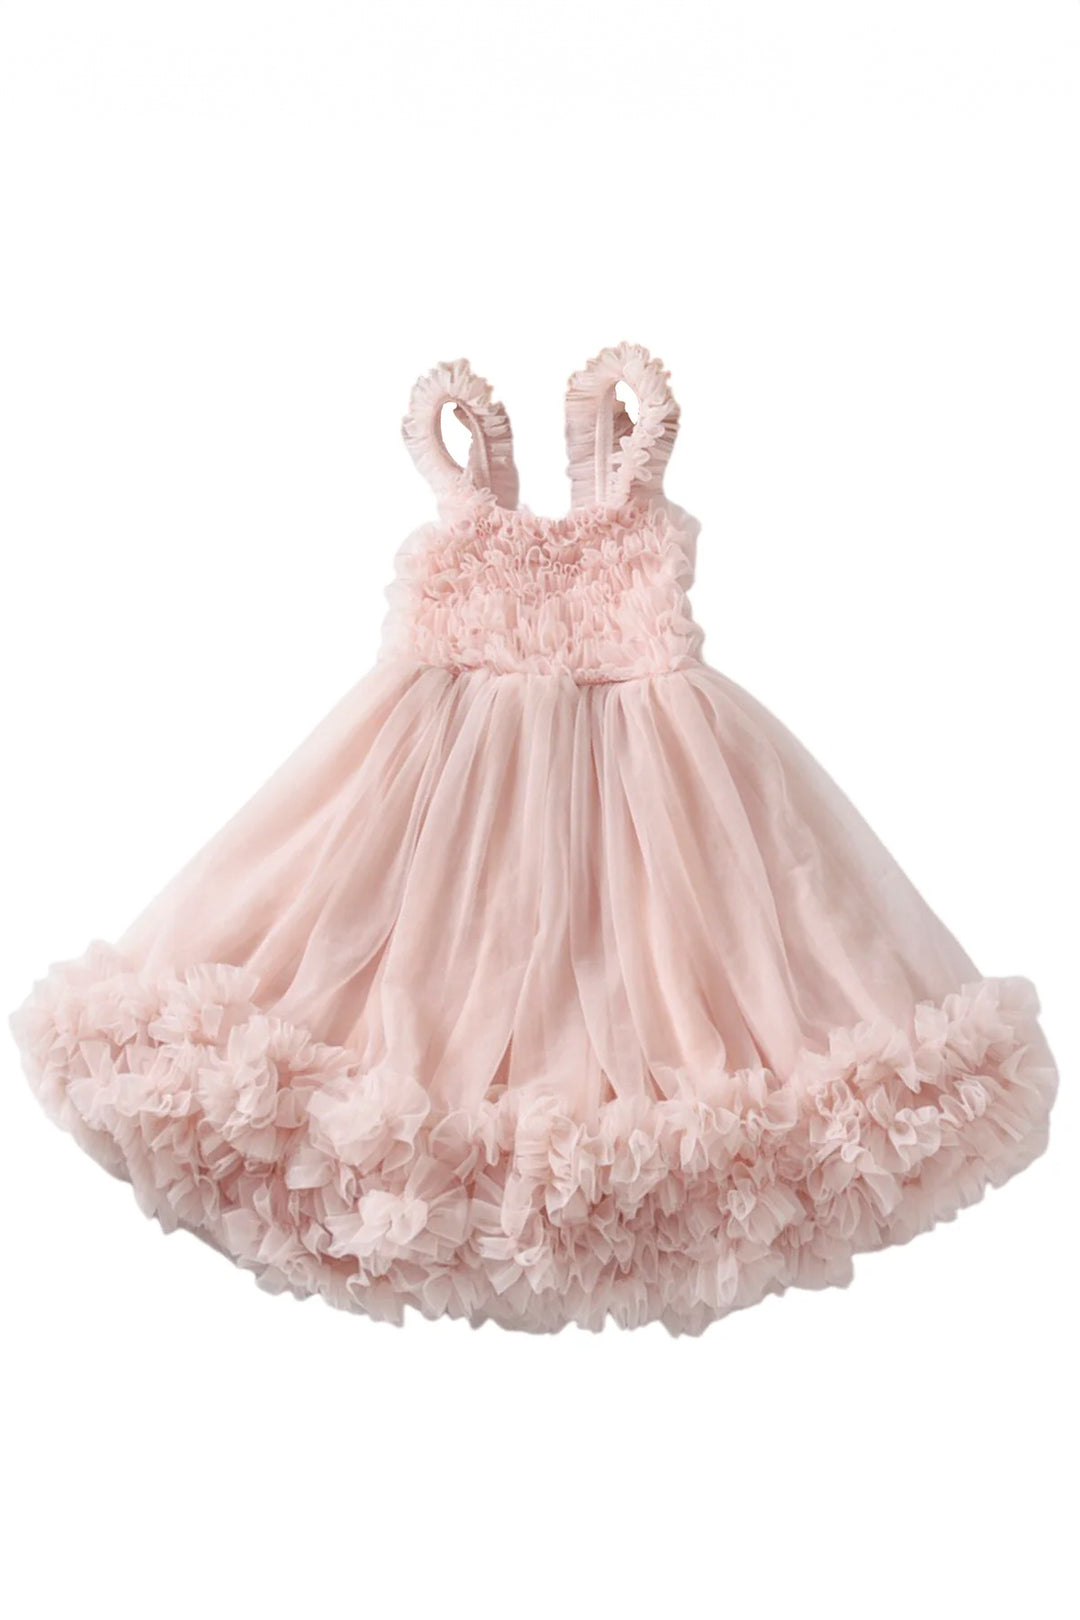 DOLLY by Le Petit Tom Pettidress Tutu Dress - Ballet Pink | Millie and John